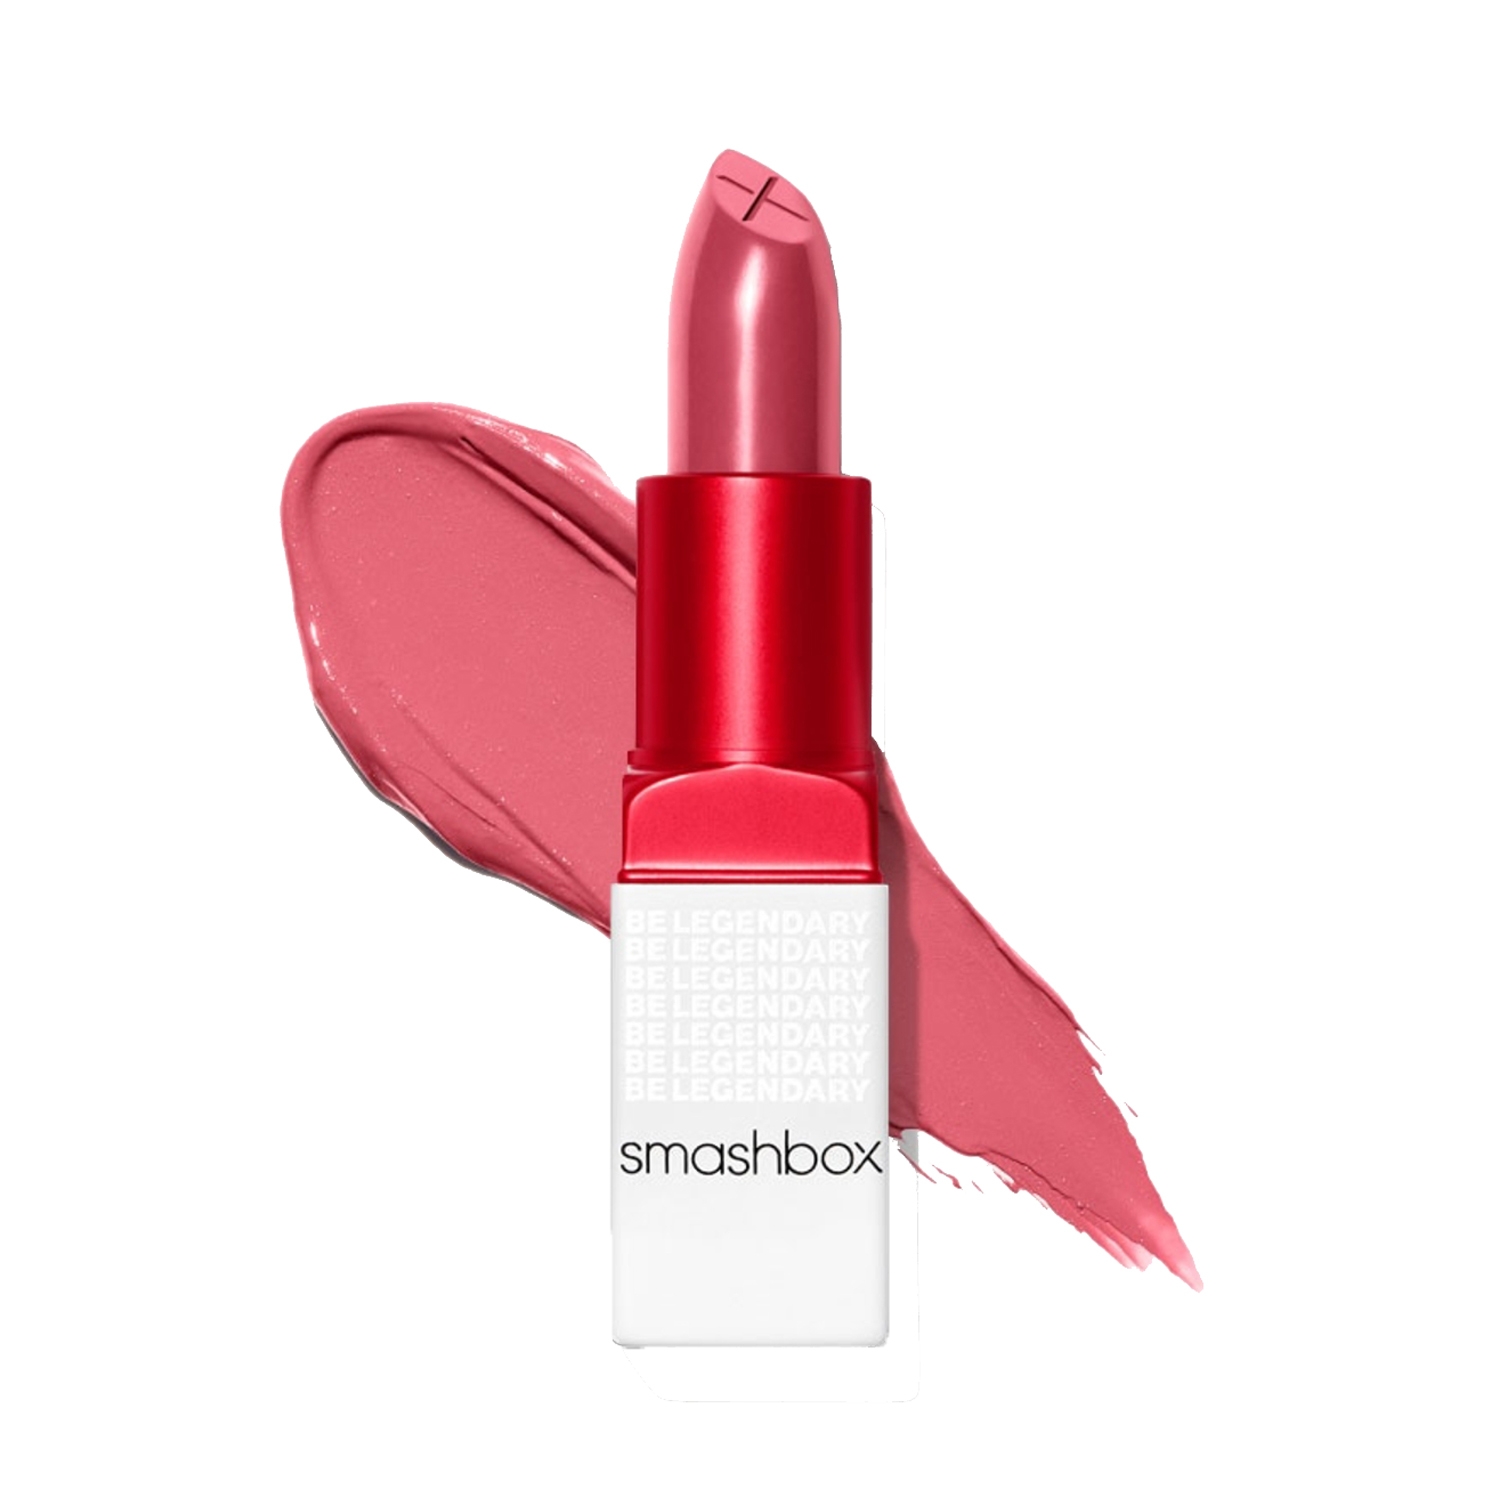 Smashbox | Smashbox Be Legendary Prime & Plush Lipstick - Rose (3.4g)